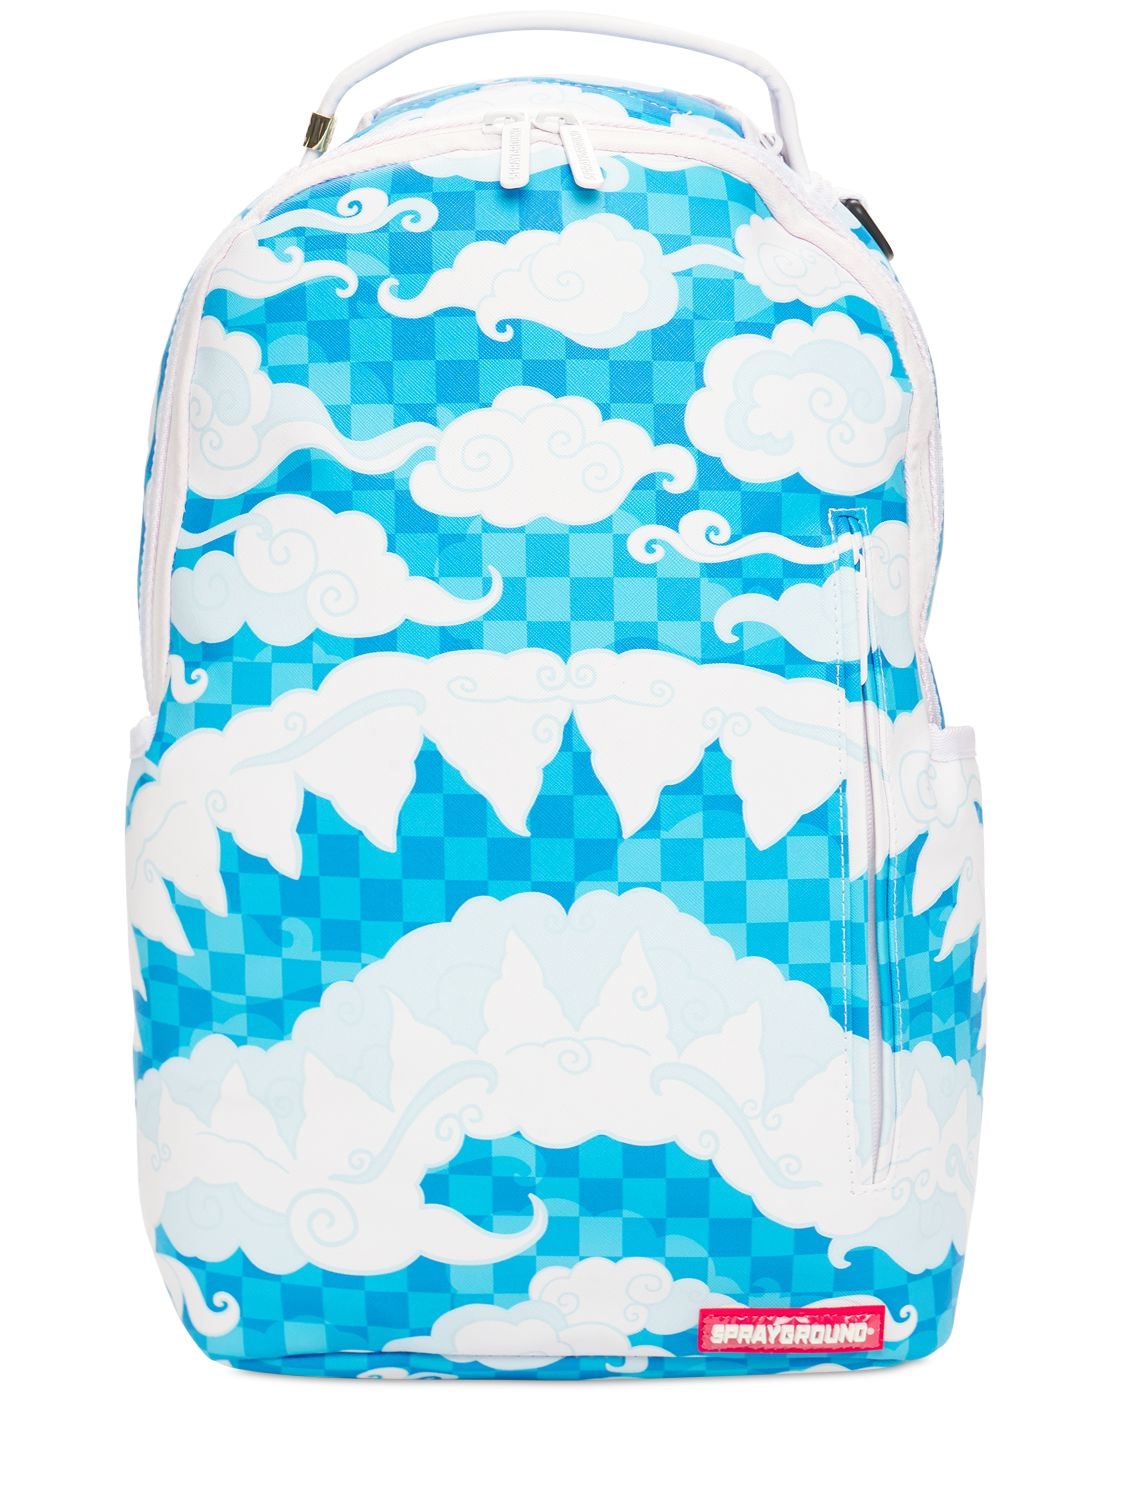 Sprayground - Children's blue travel bag with ELECTRICSP print